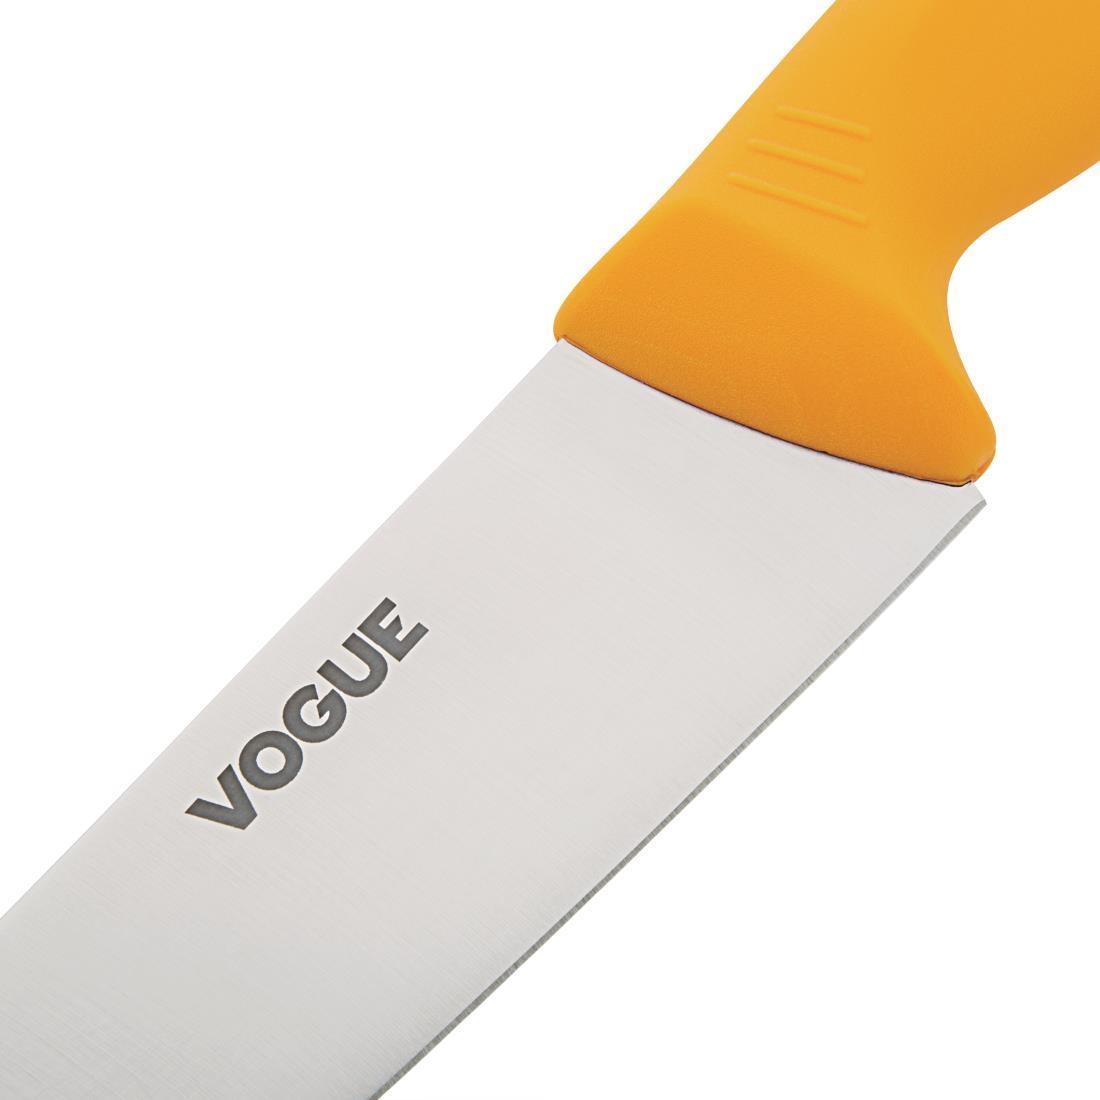 Vogue Soft Grip Pro Chef Knife 20cm - GH526  - 3